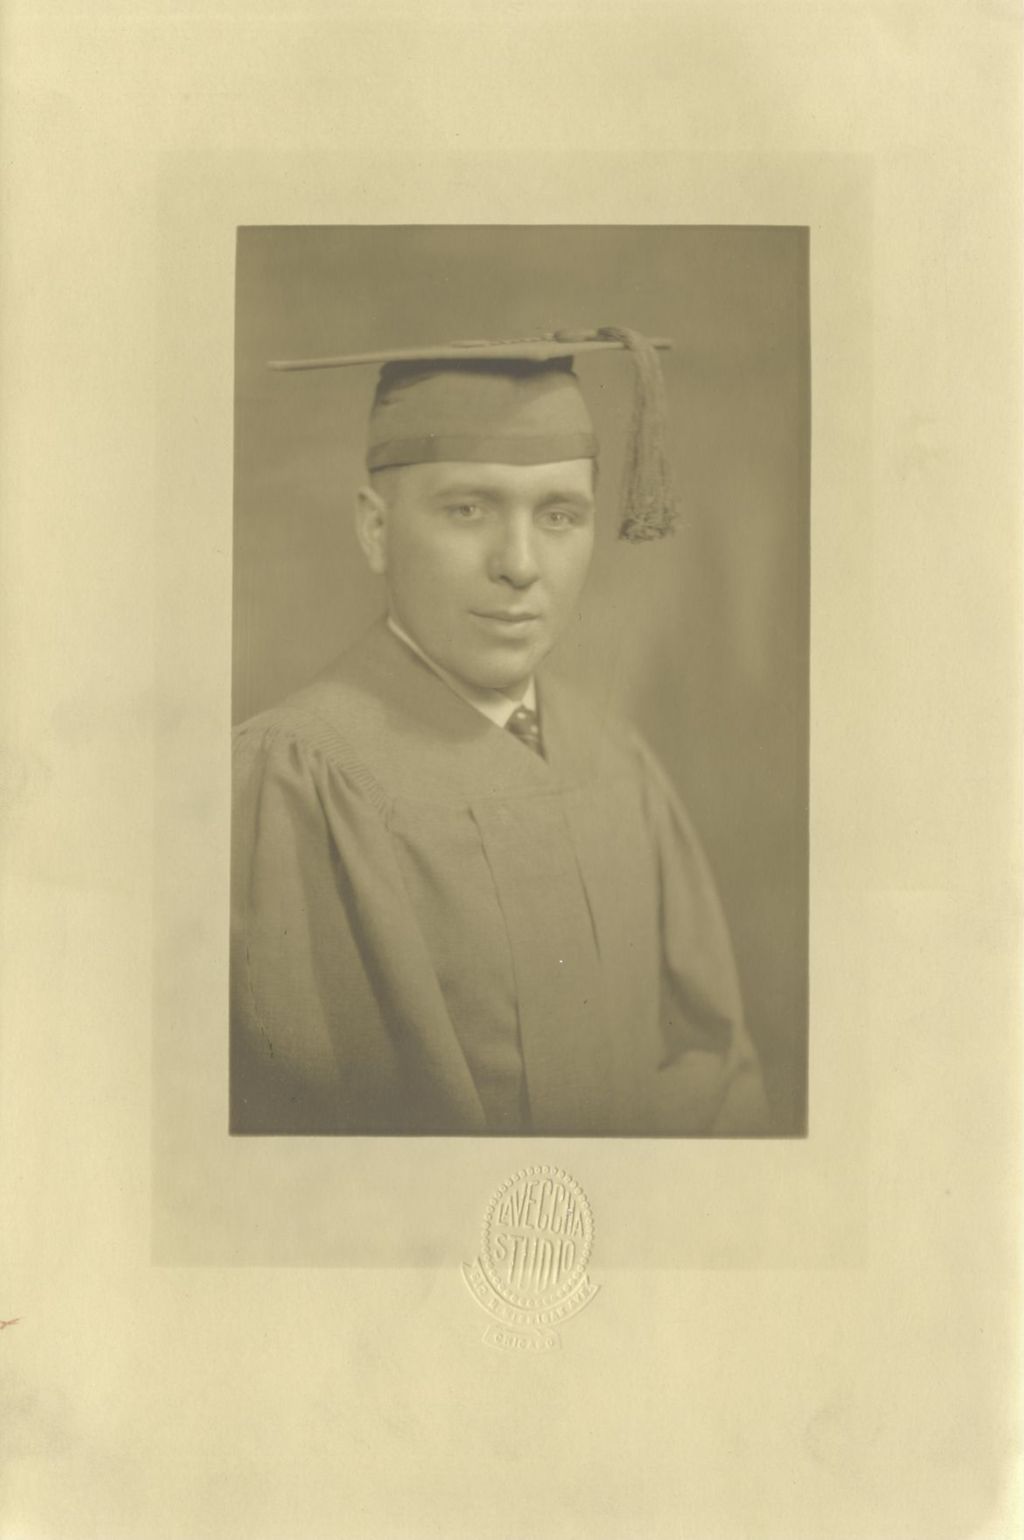 Richard J. Daley's Law School graduation portrait